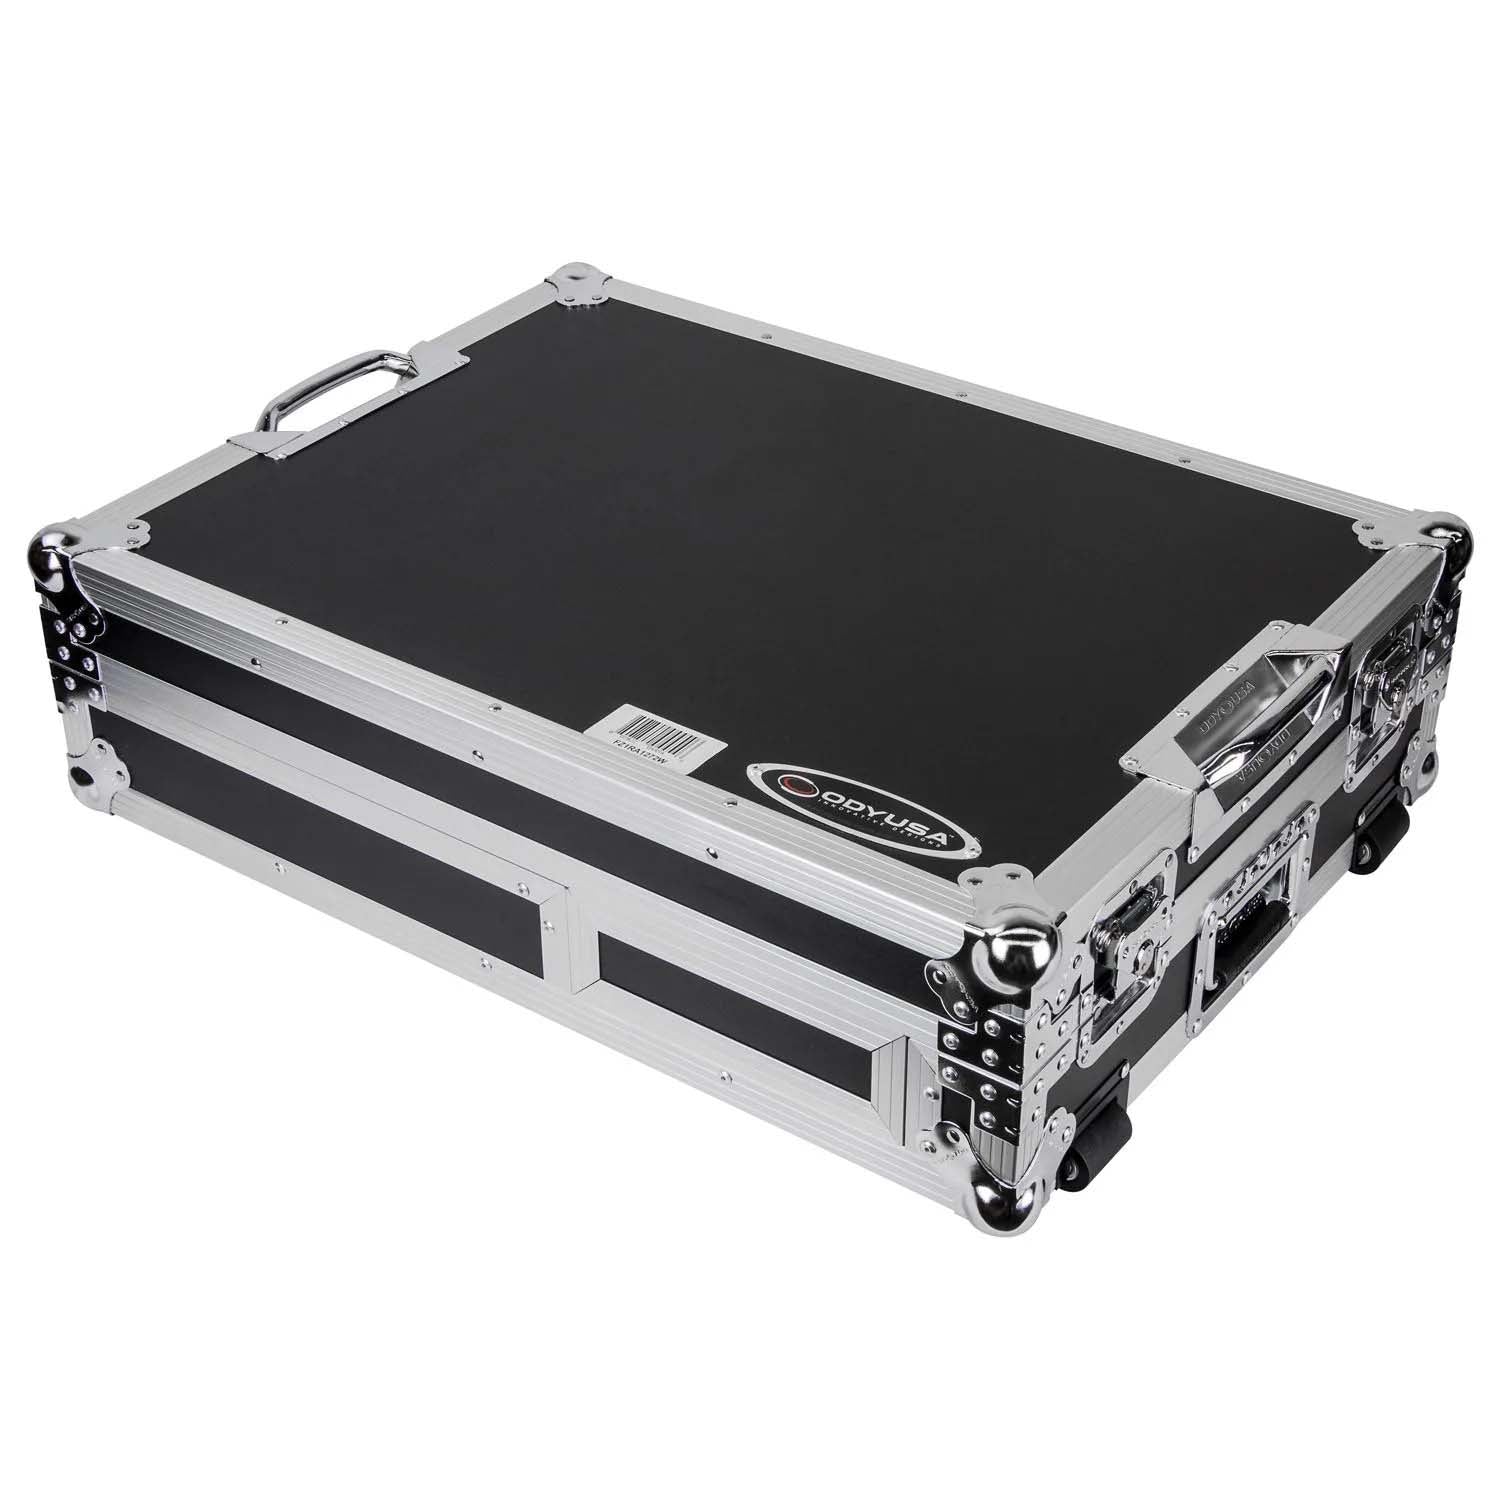 Odyssey FZ1RA1272W Reversible Compact Battle DJ Coffin Flight Case For Rane Twelve and Rane Seventy-Two Mixers Odyssey